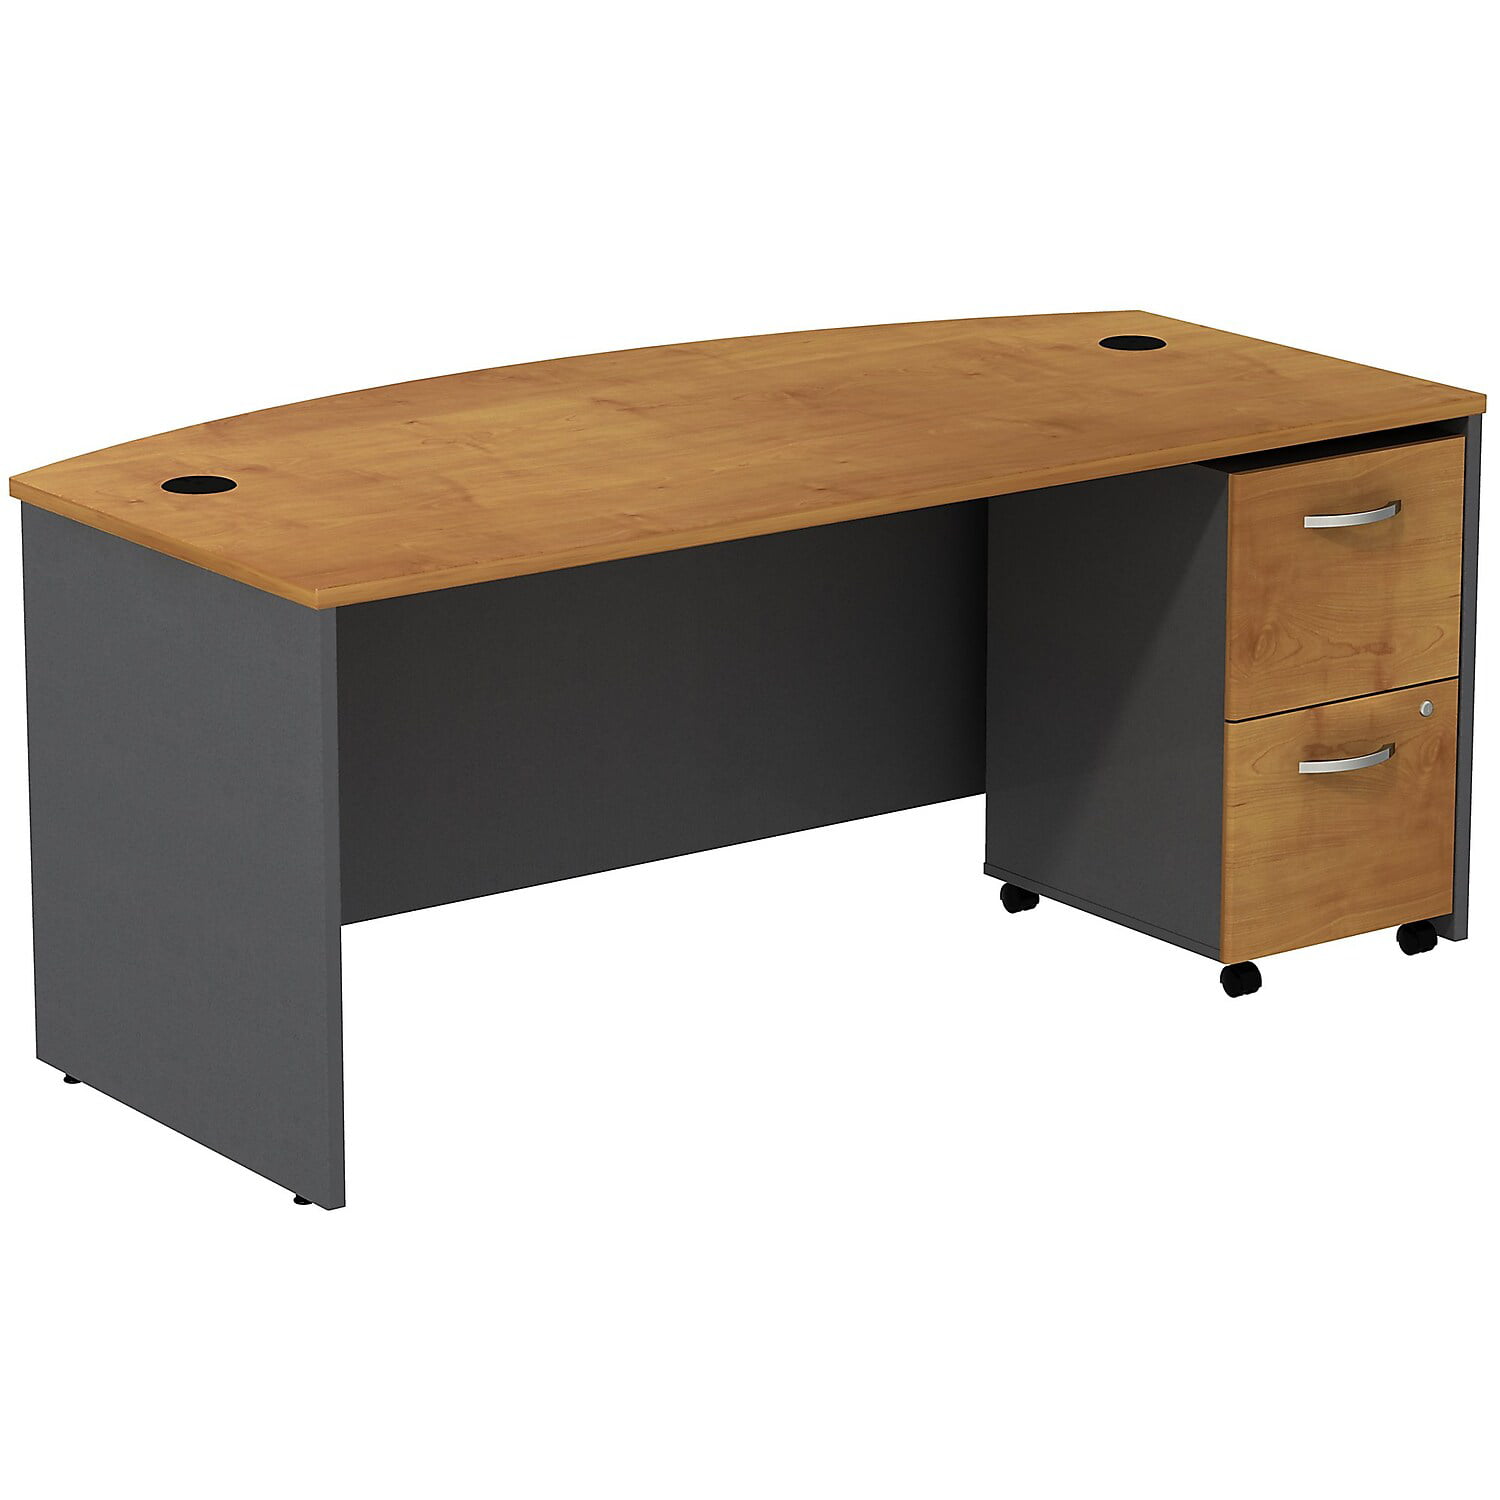 SRC0020NCSU Series C Bow Front Desk with 2 Drawer Mobile Pedestal - Natural Cherry -  Bush Business Furniture